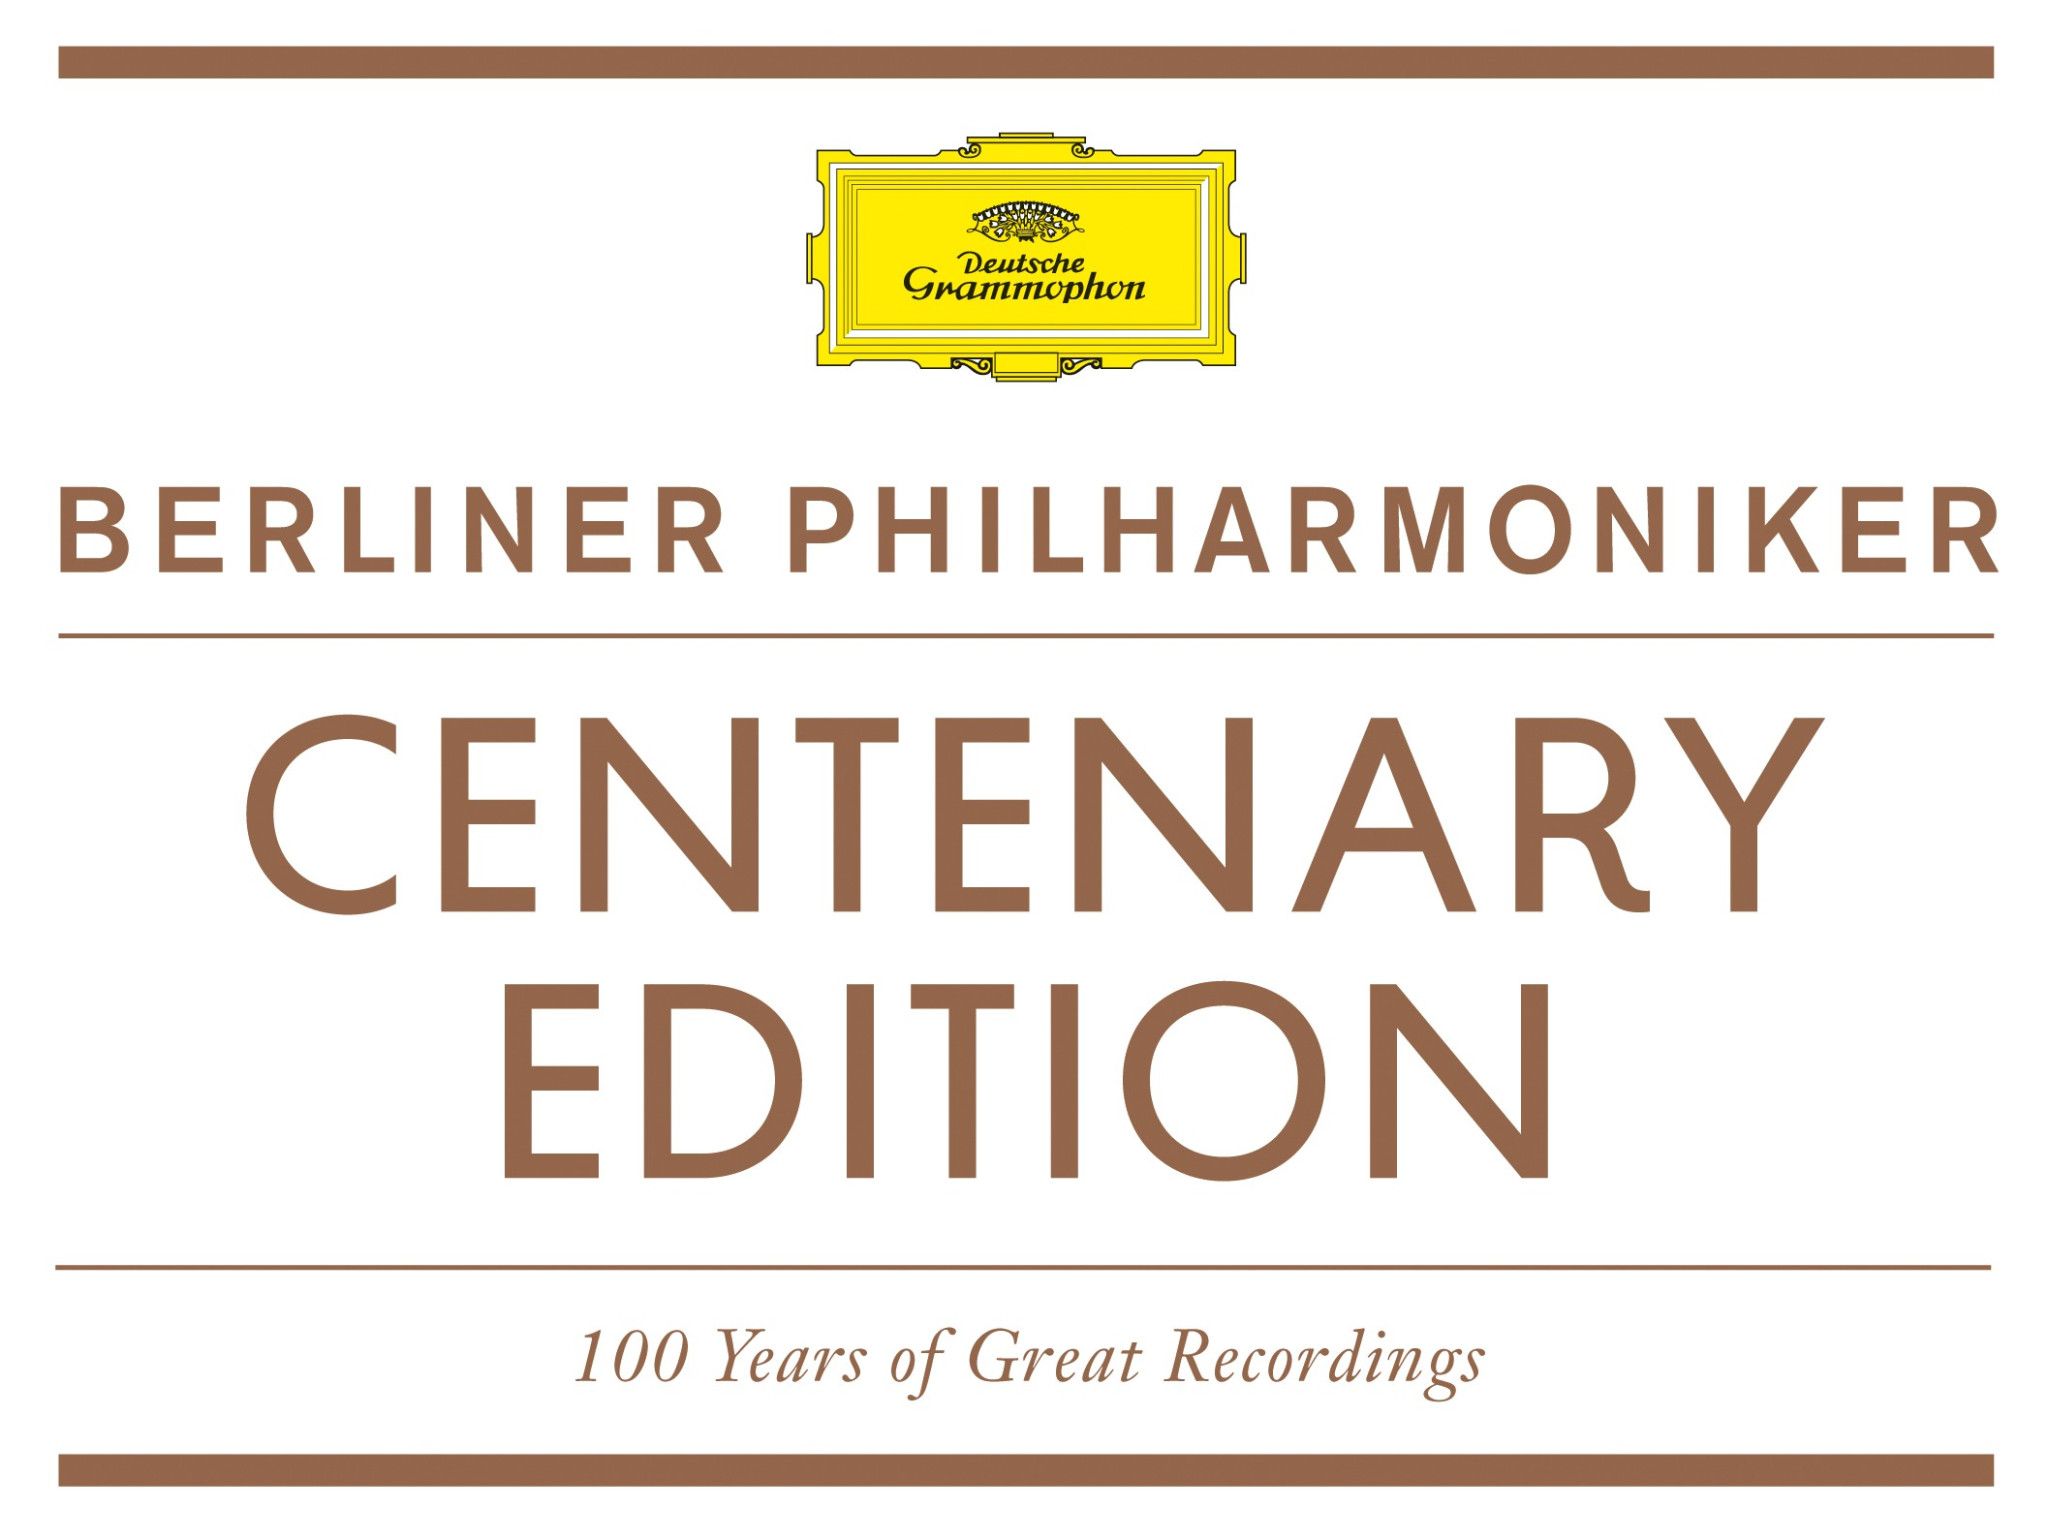 Berliner Philharmoniker Jahrhundert Edition